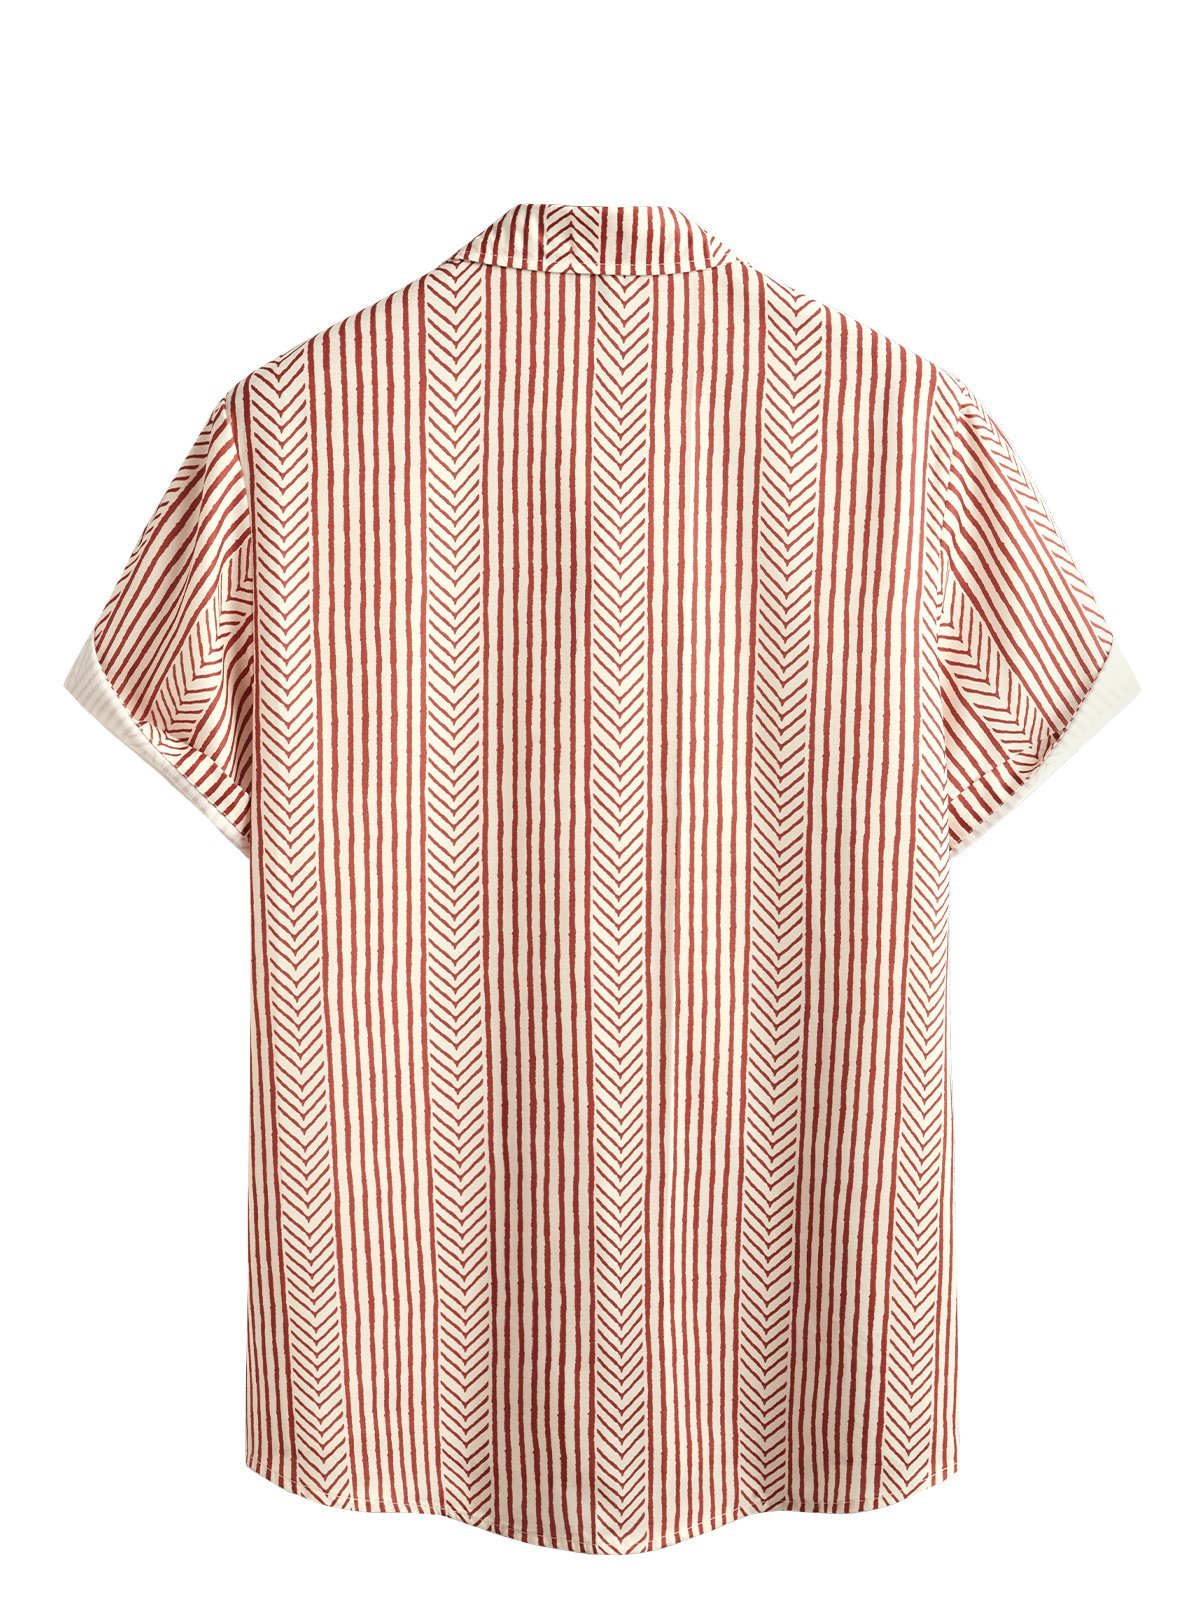 Big Size Retro Striped Chest Pocket Short Sleeve Shirt